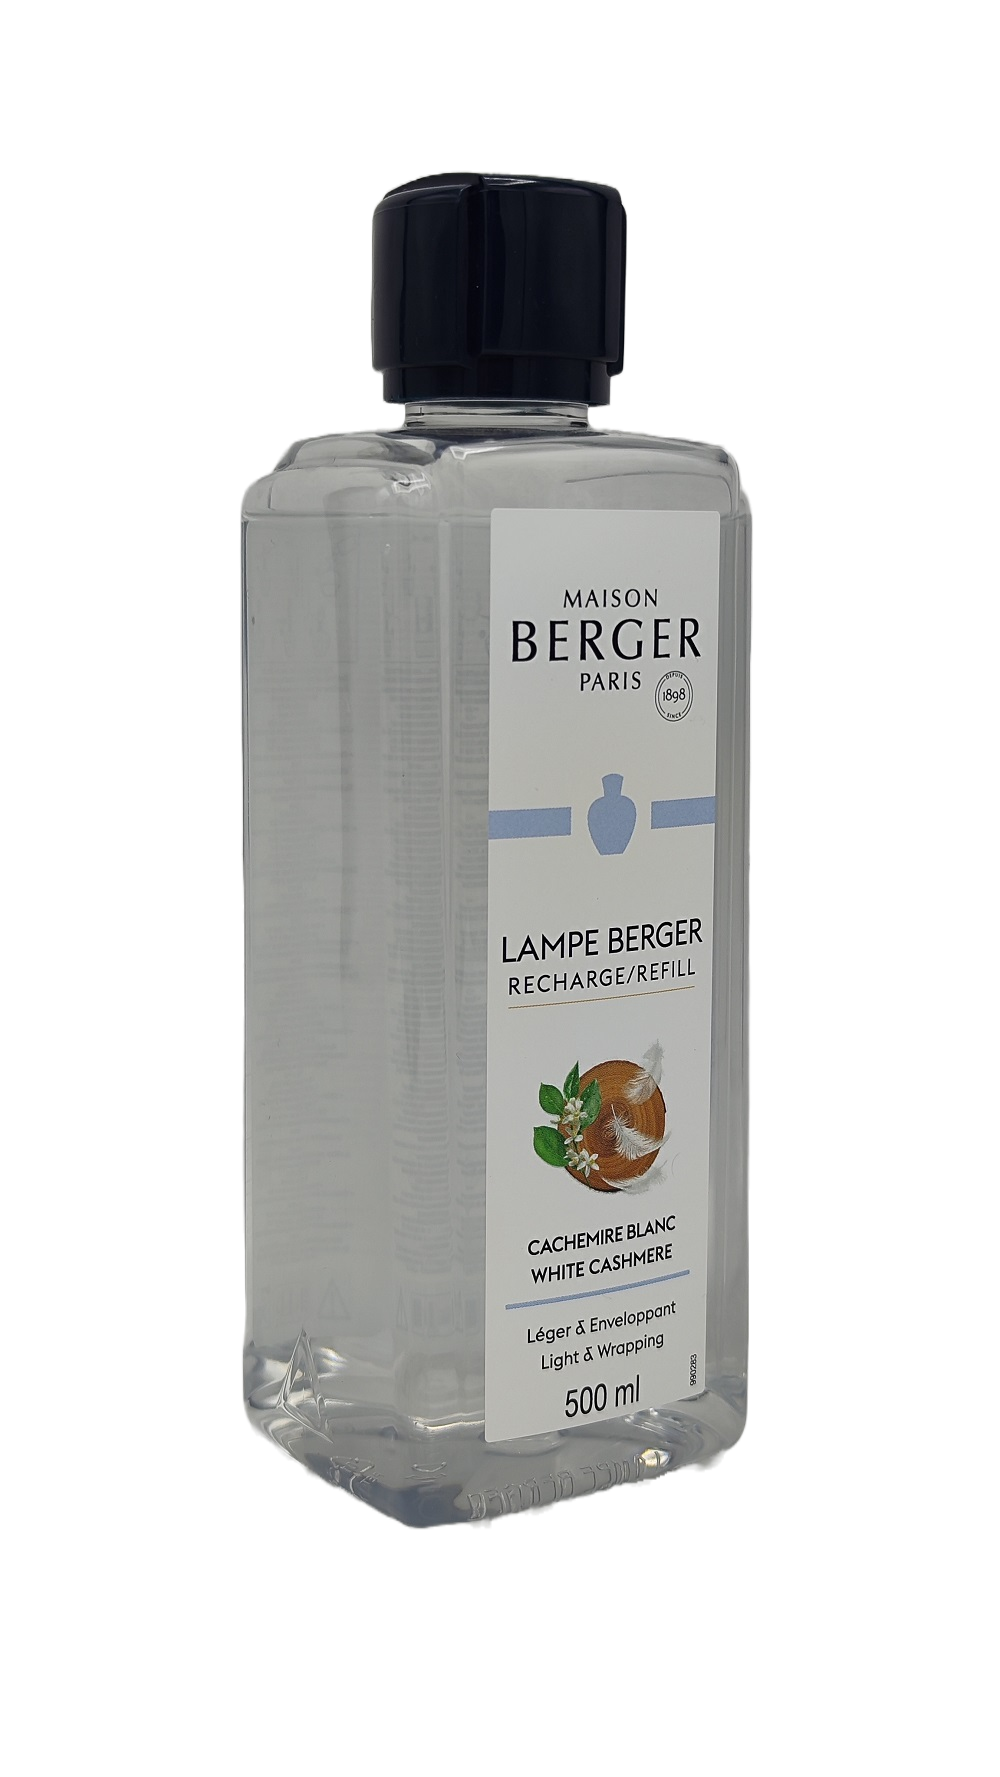 White Cashmere - Lampe Berger Refill 500 ml - Maison Berger